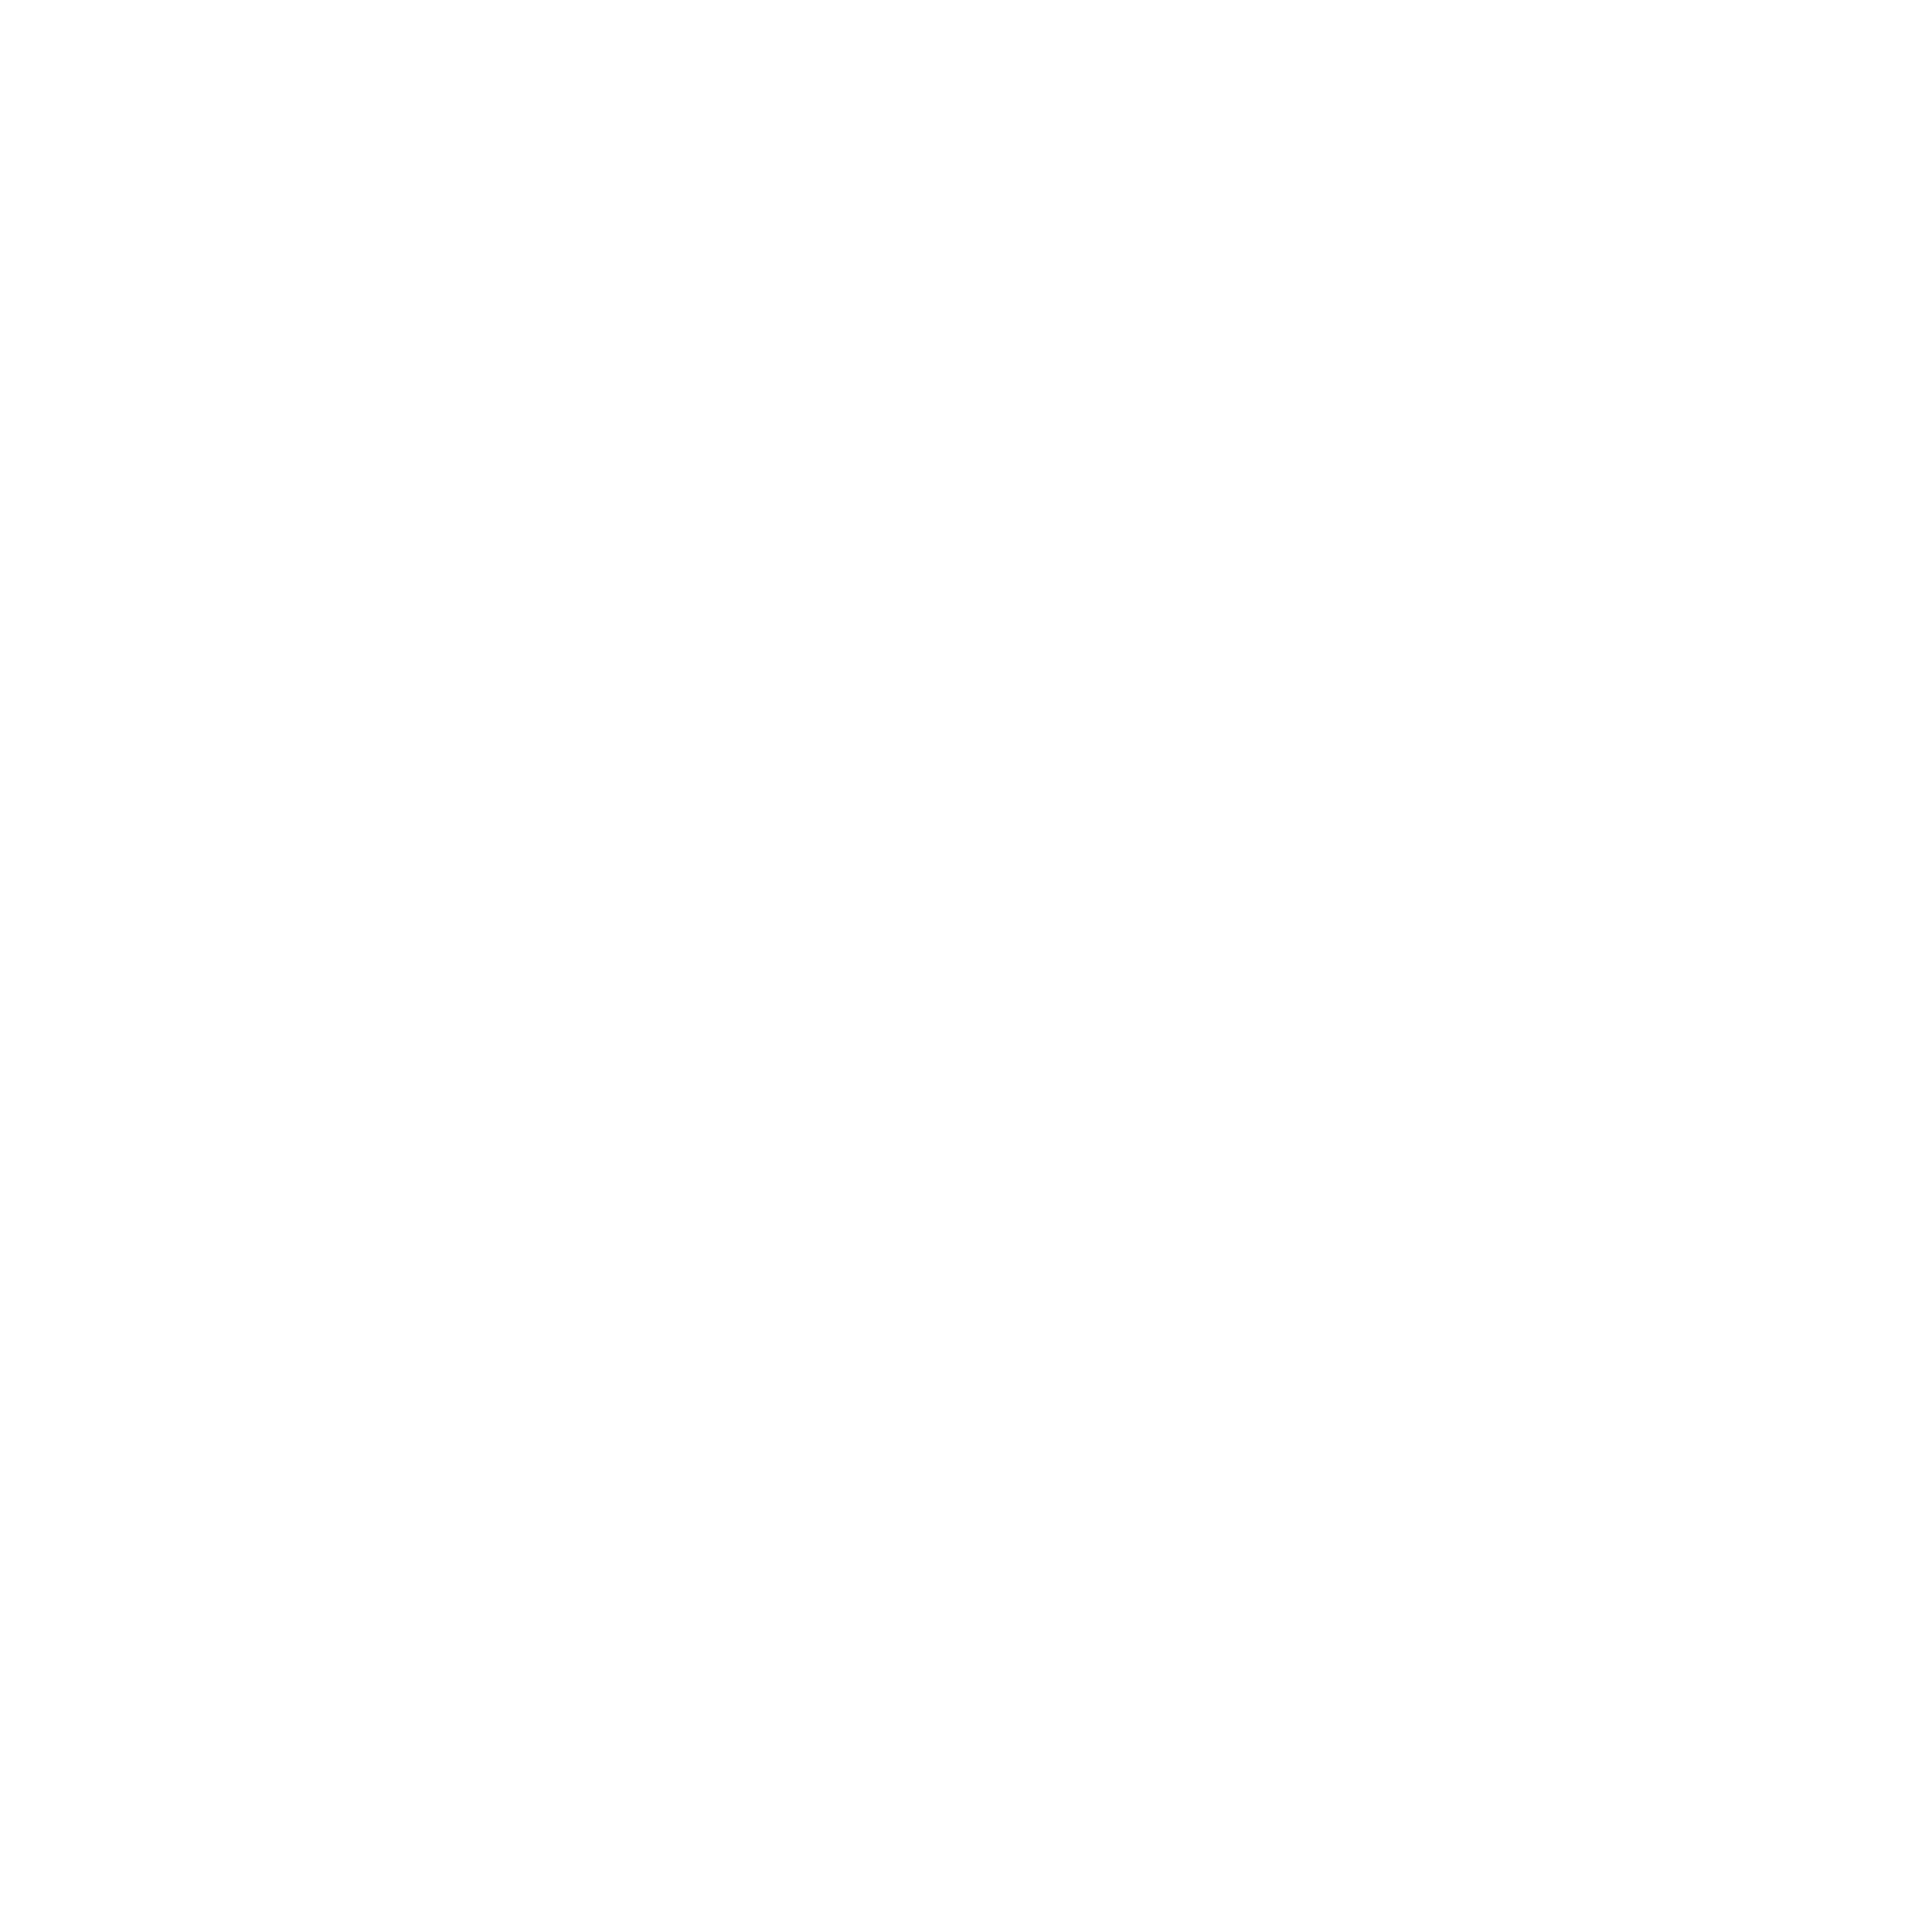 A stylized Facebook logo